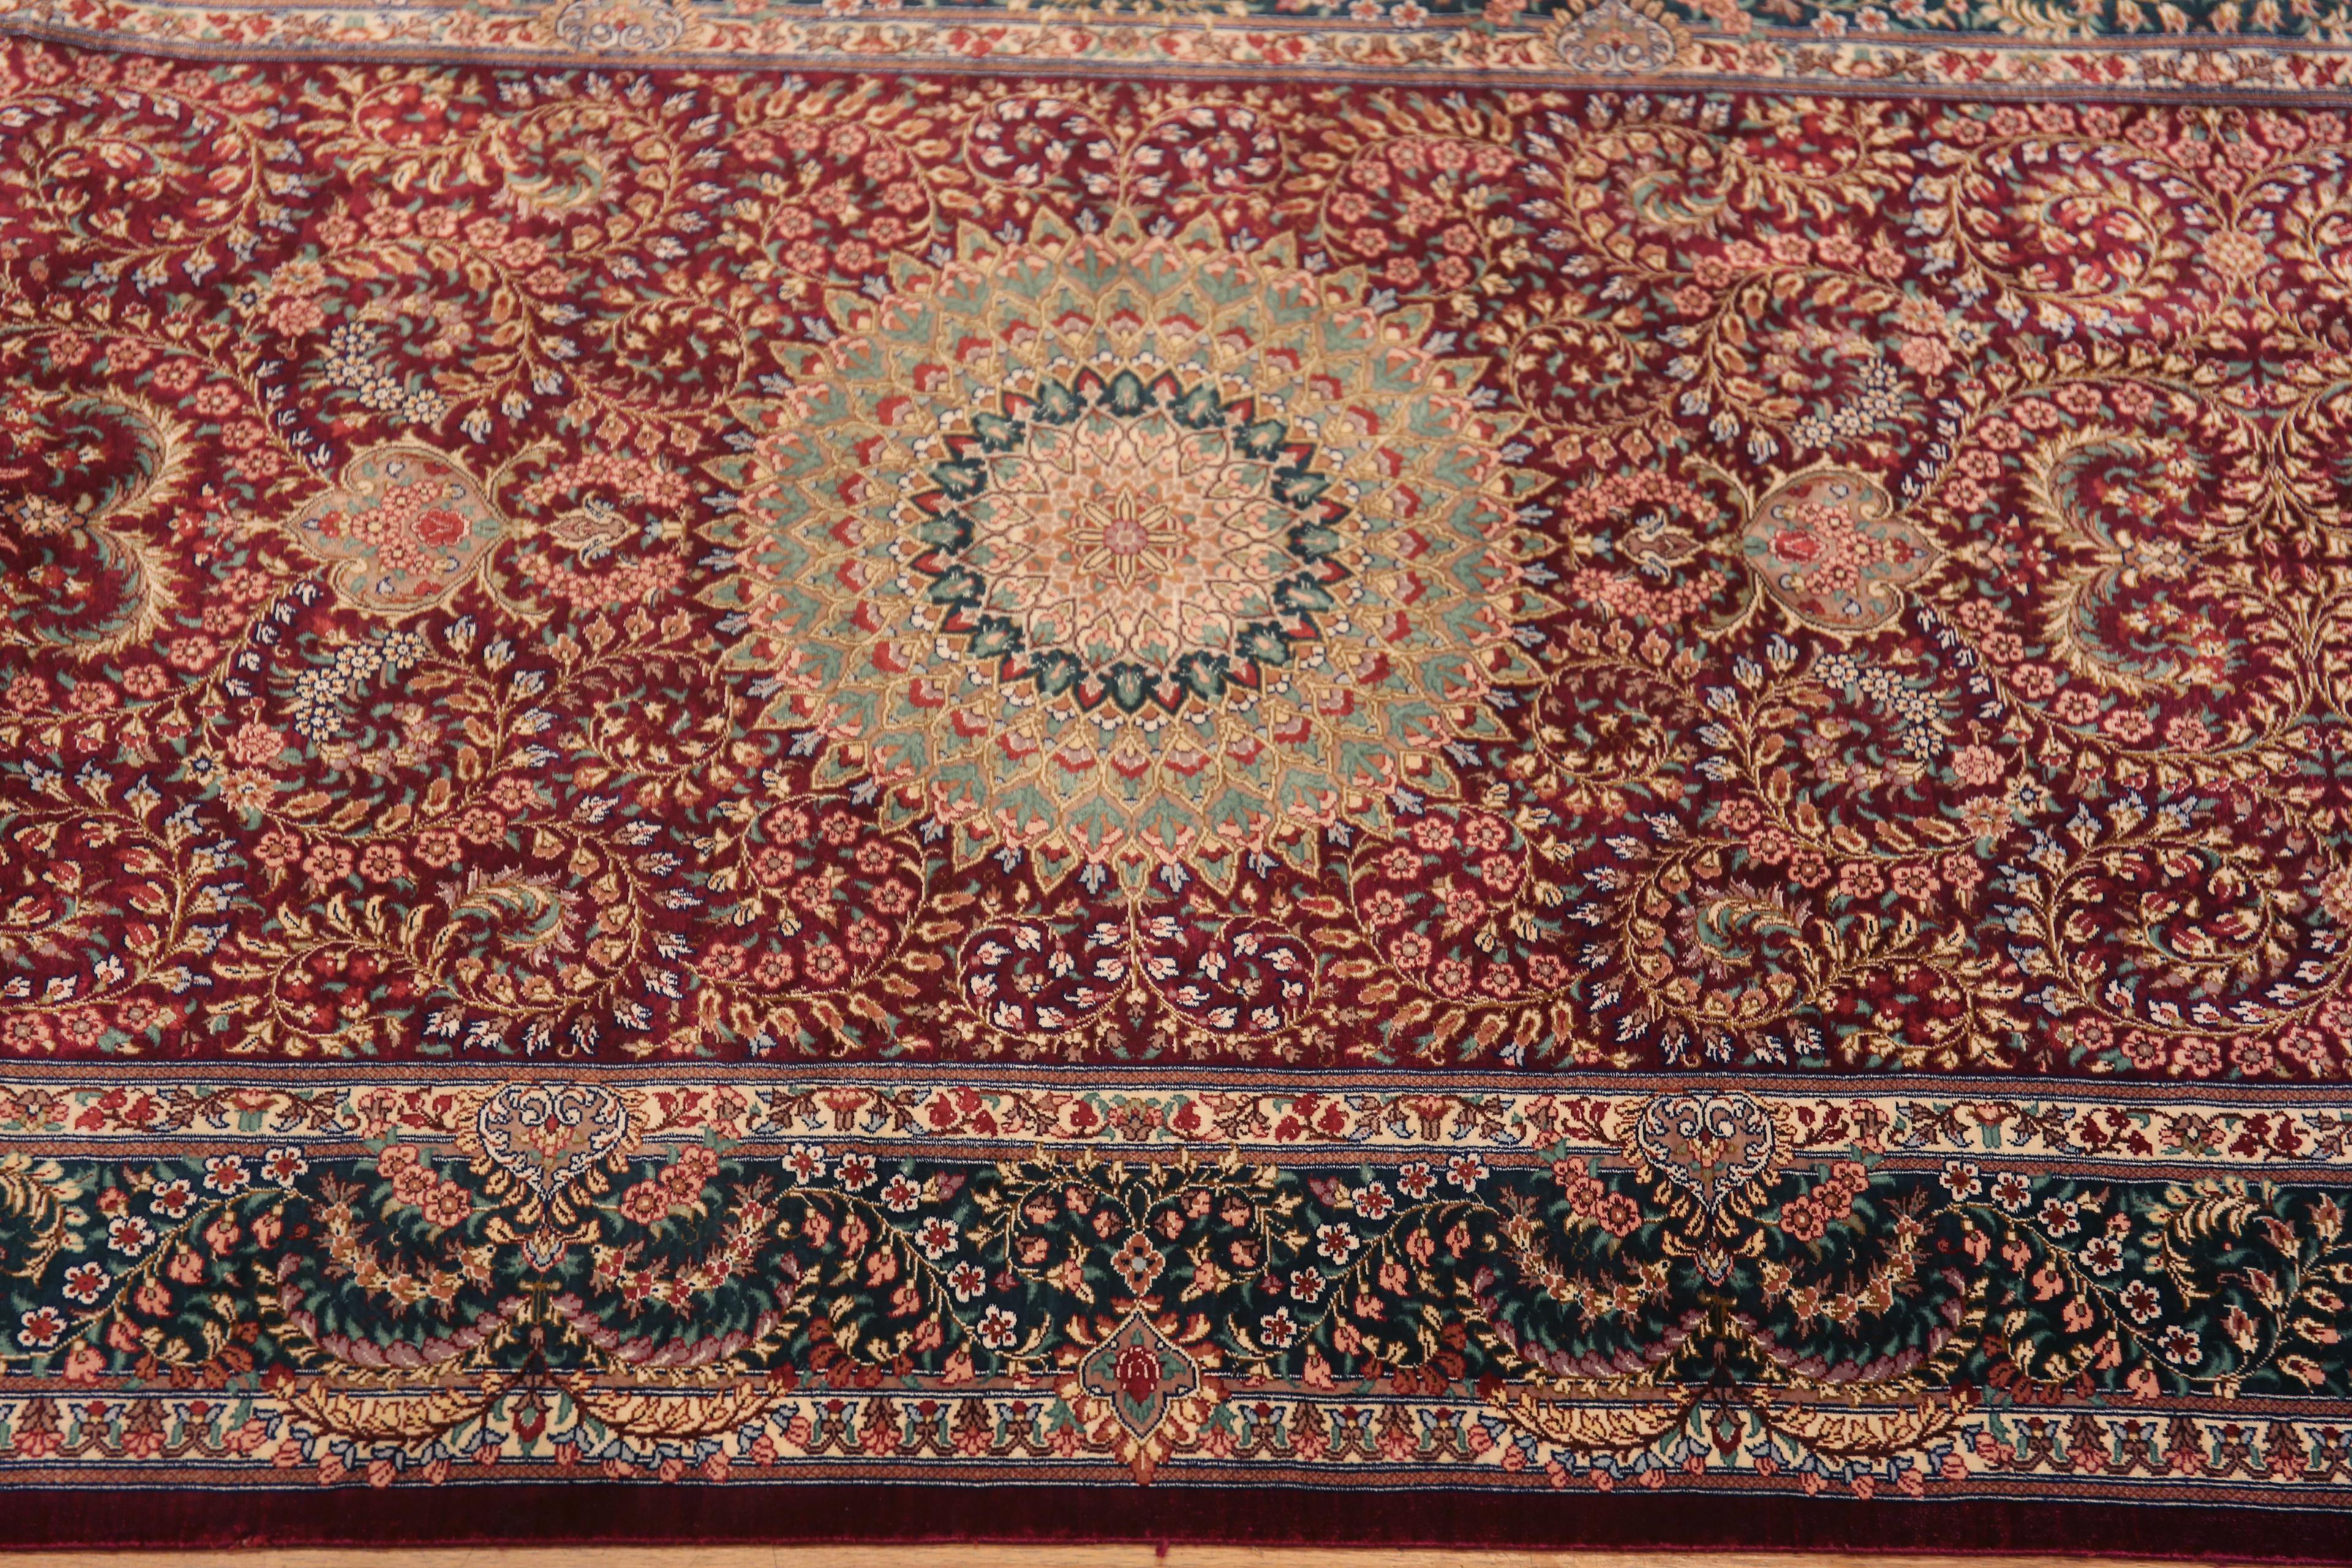 Breathtaking Luxurious Fine Floral Vintage Persian Silk Qum Hallway Runner Rug, country of origin: Persian Rugs, Circa date: Vintage